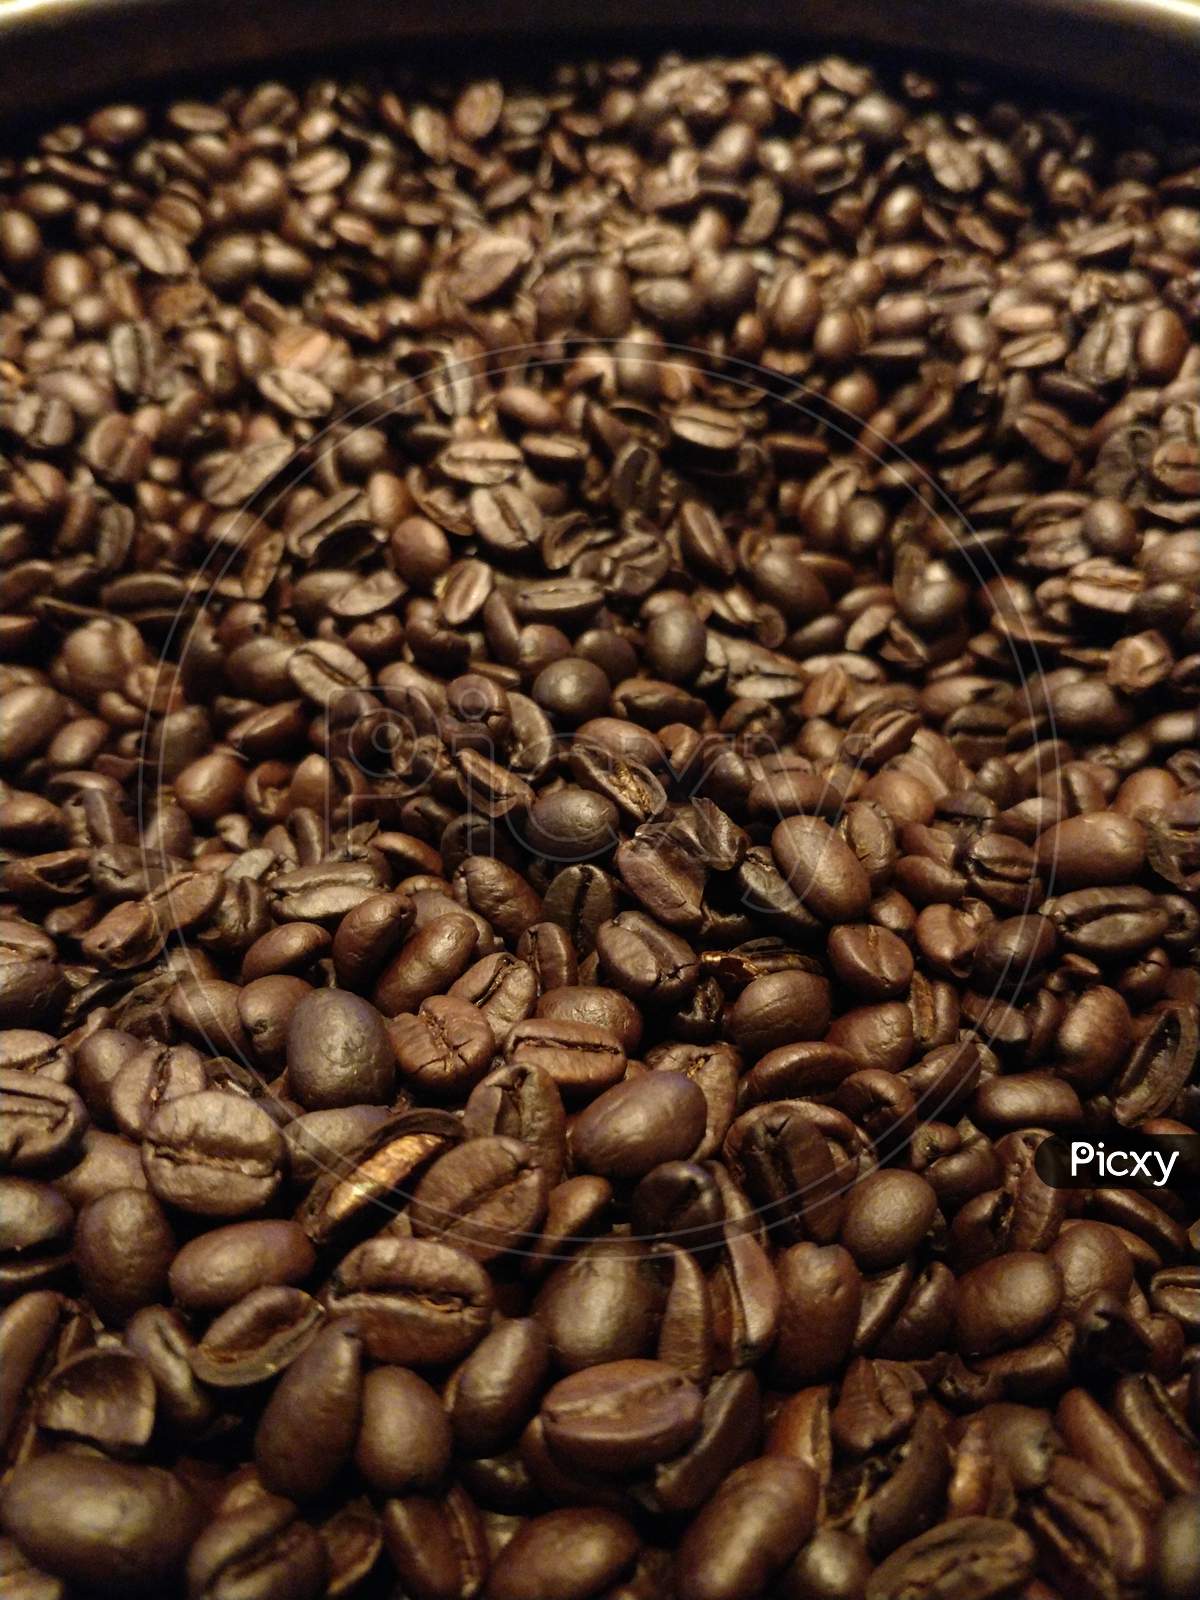 Coffee beans at Starbucks